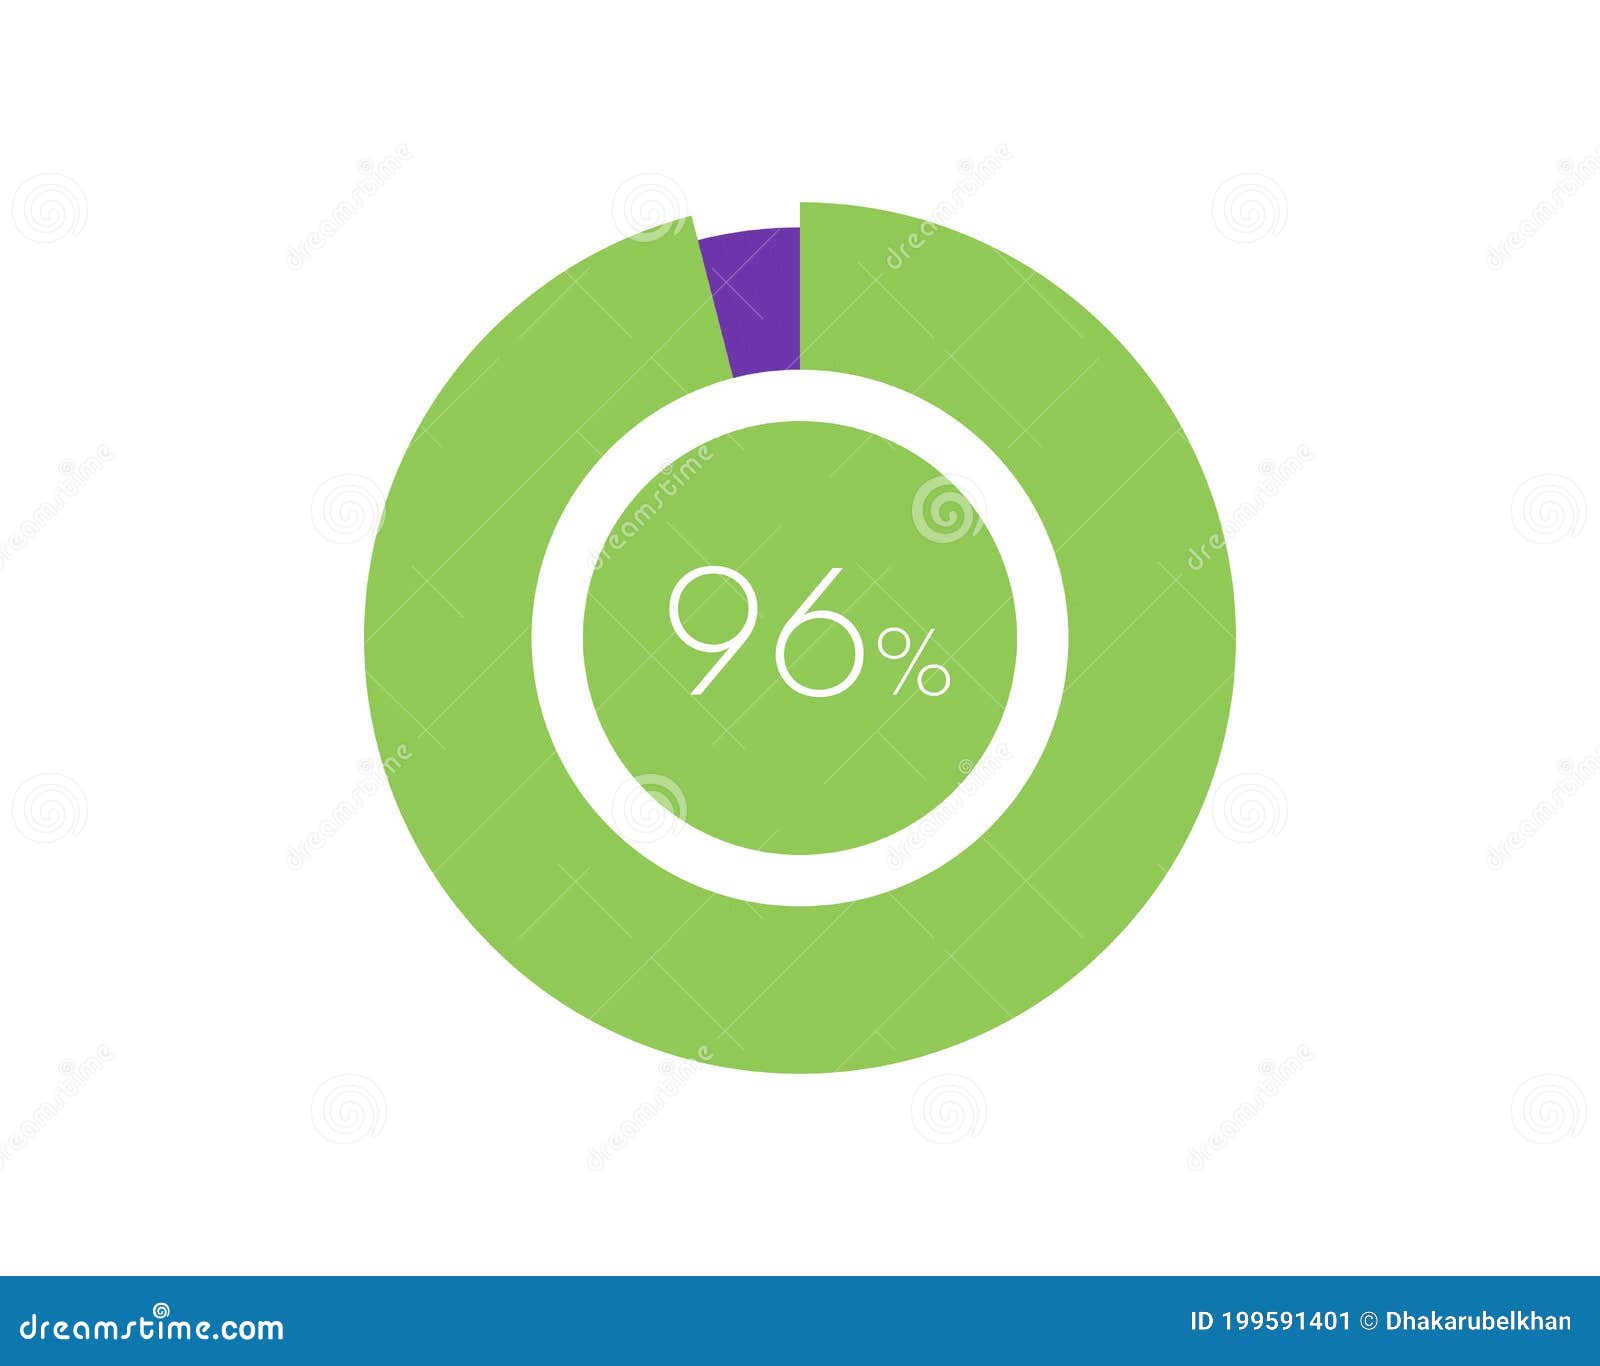 96-percentage-96-percentage-circle-diagram-infographic-stock-vector